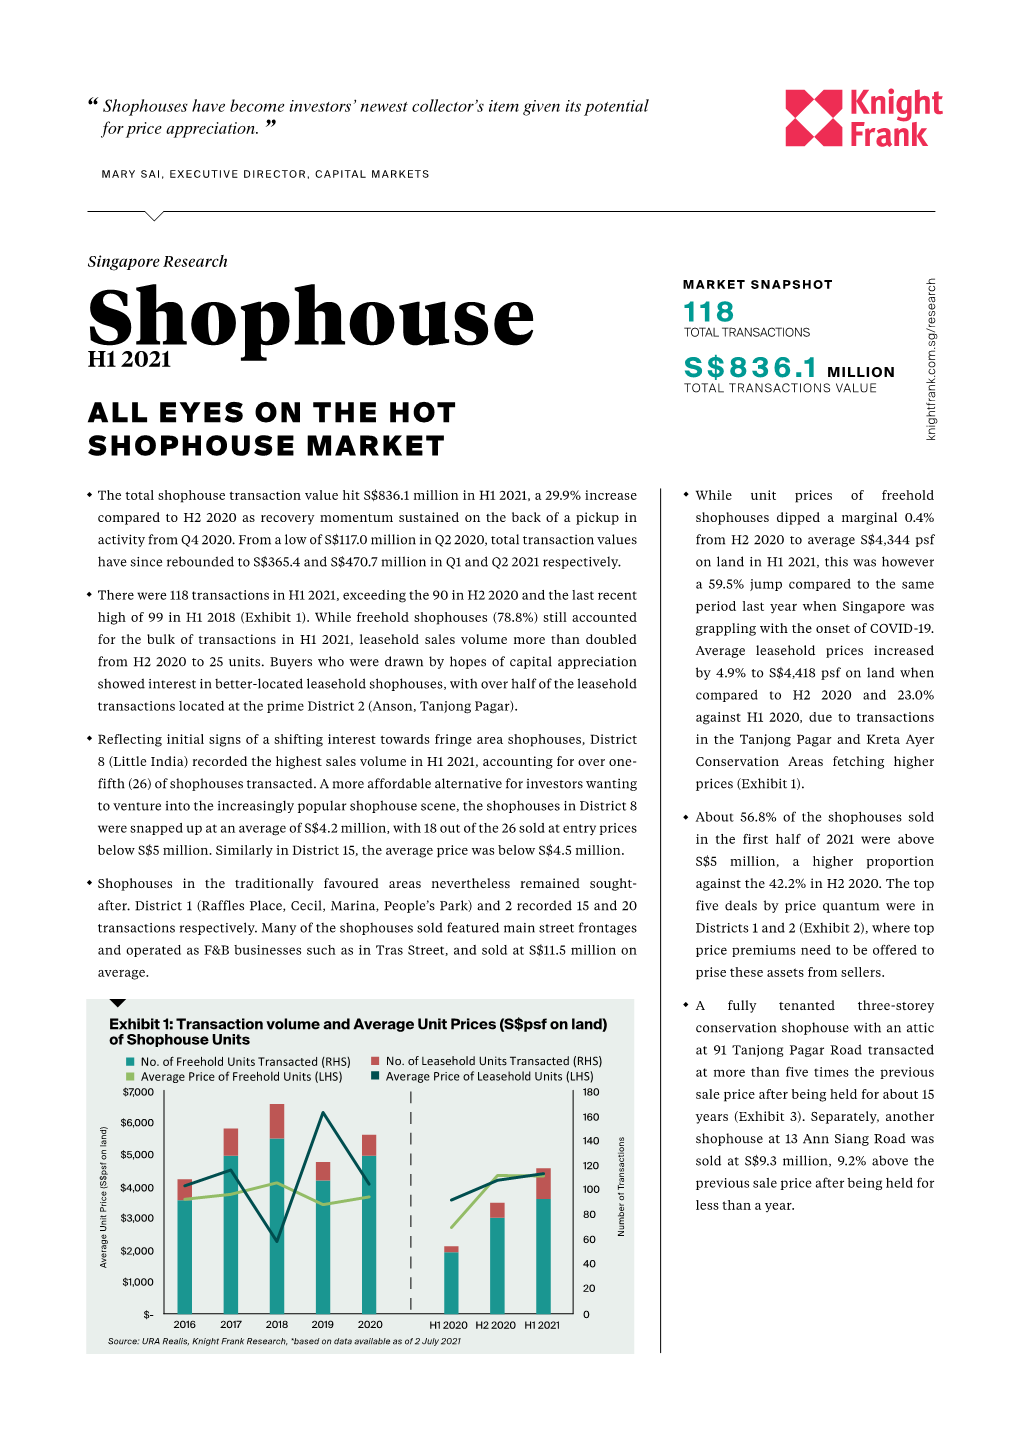 Singapore Shophouse Market Update